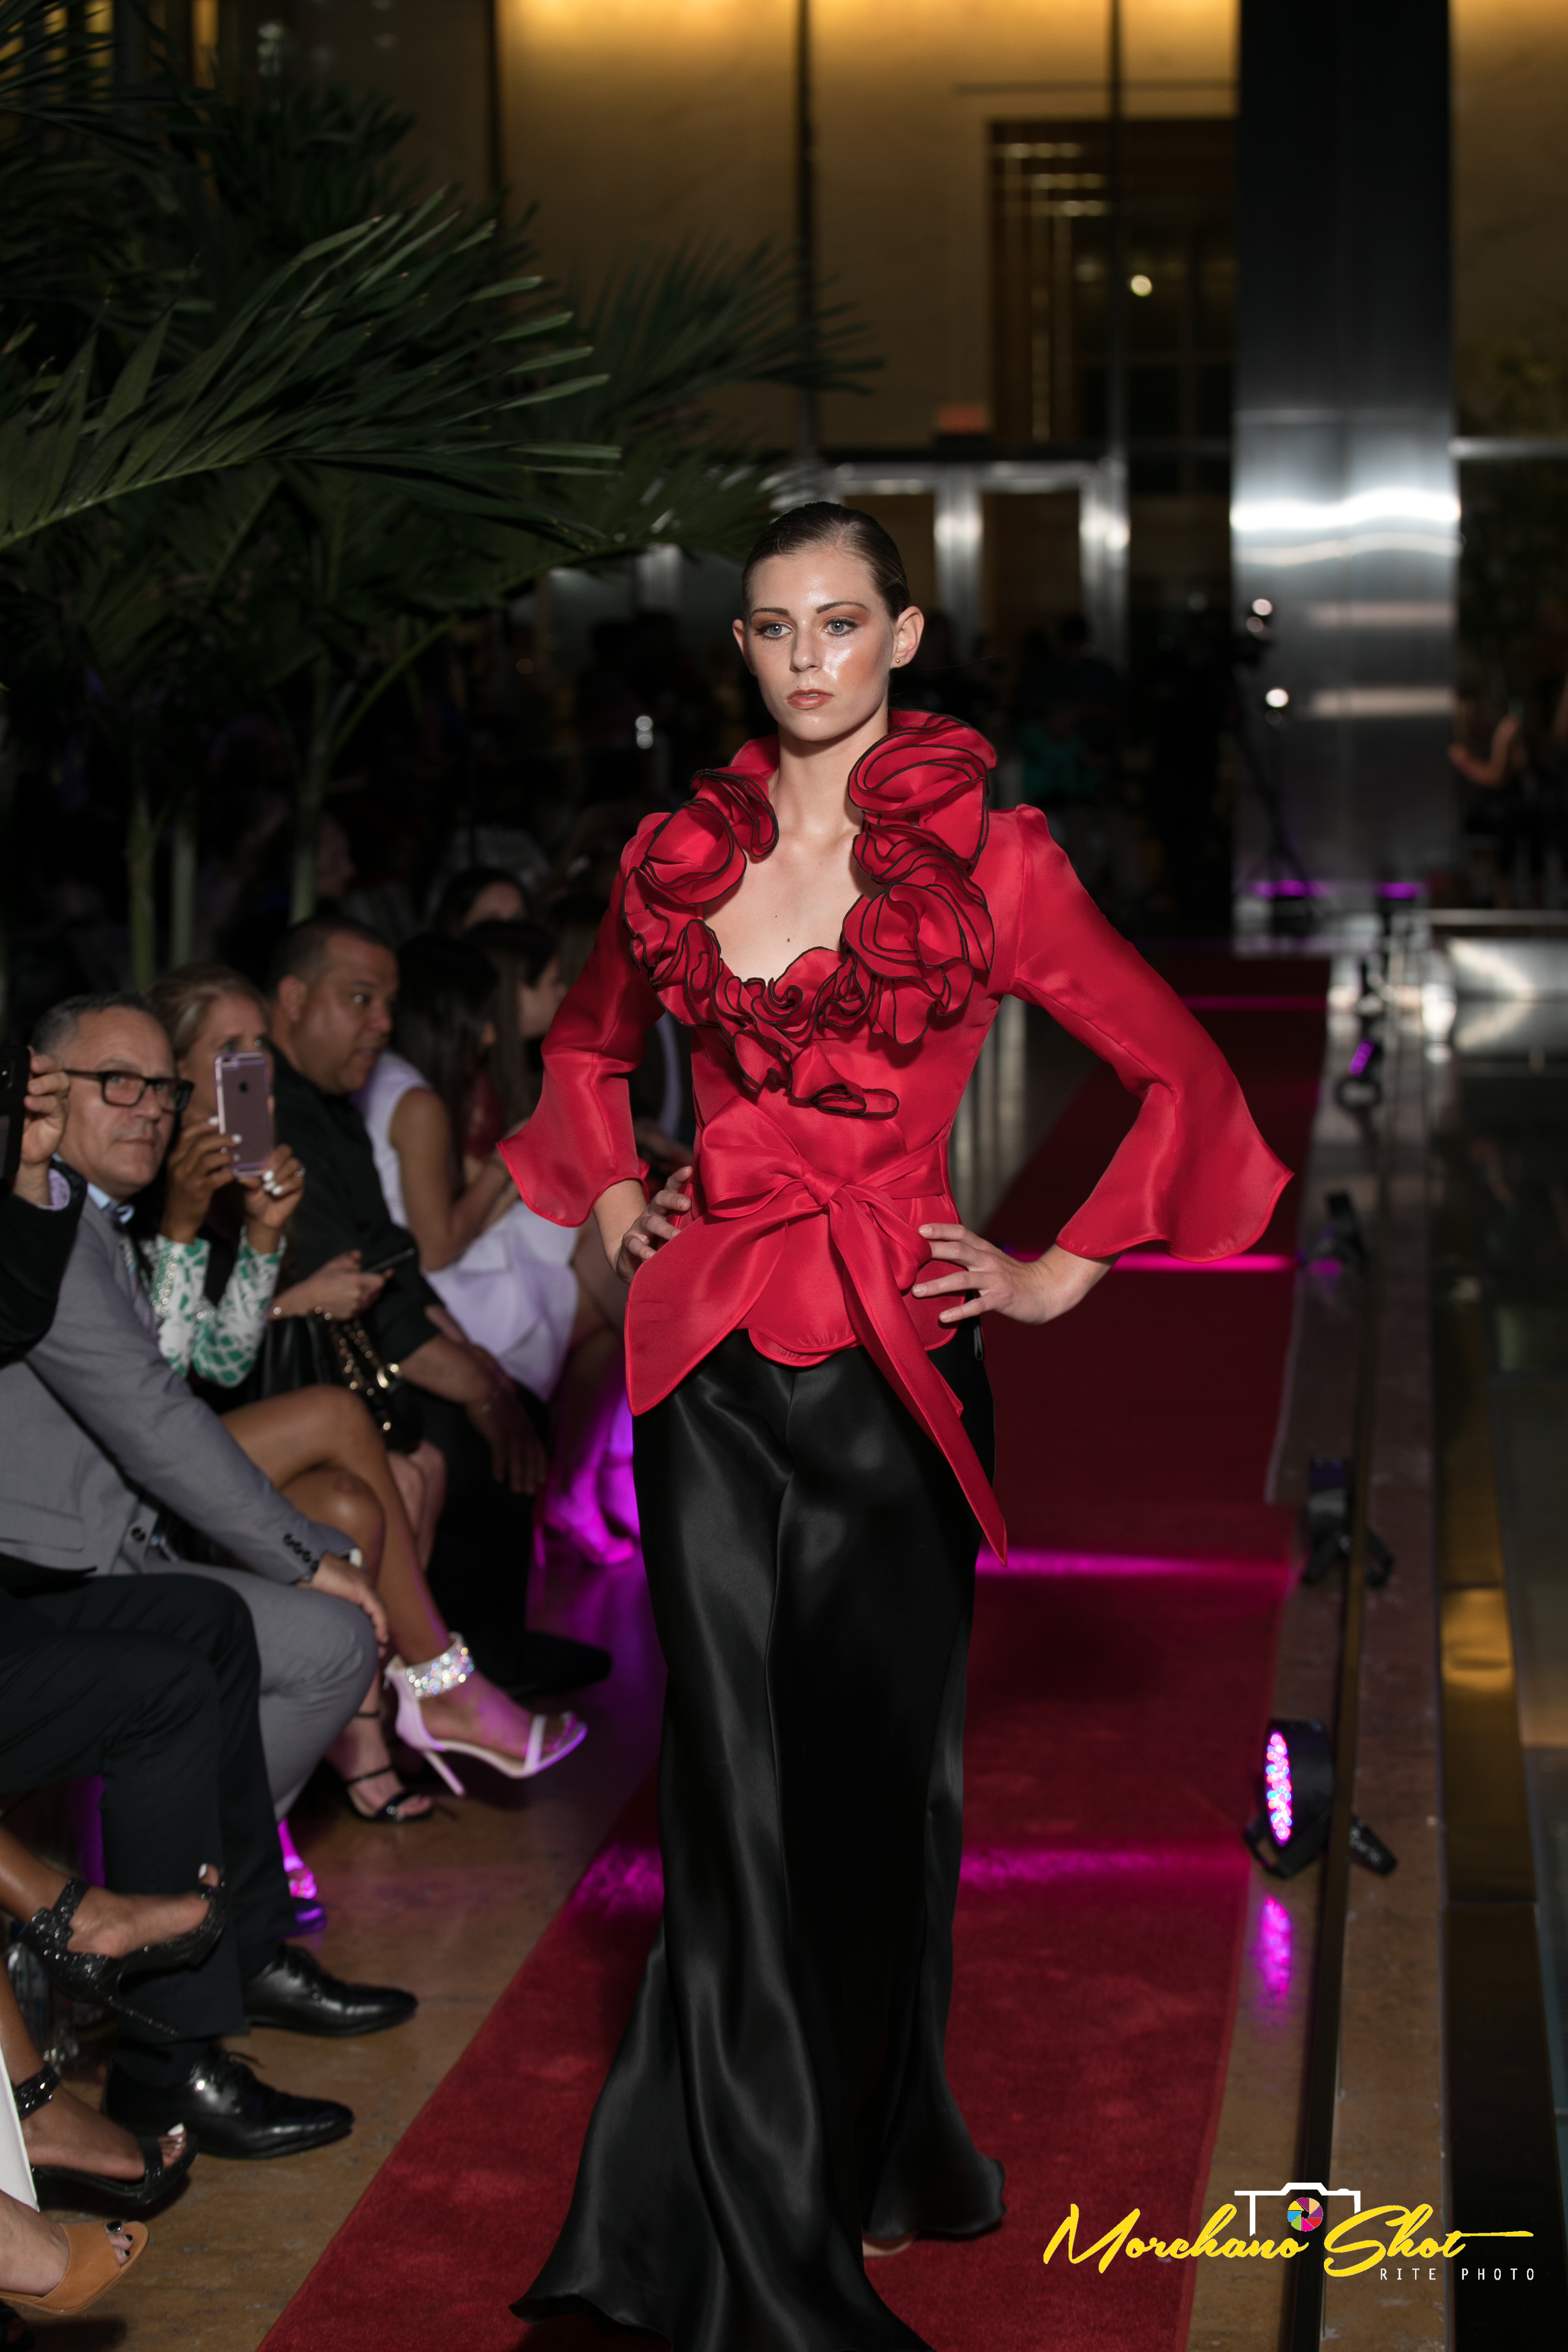 Runway fashion at Fashion Night on Brickell 2018